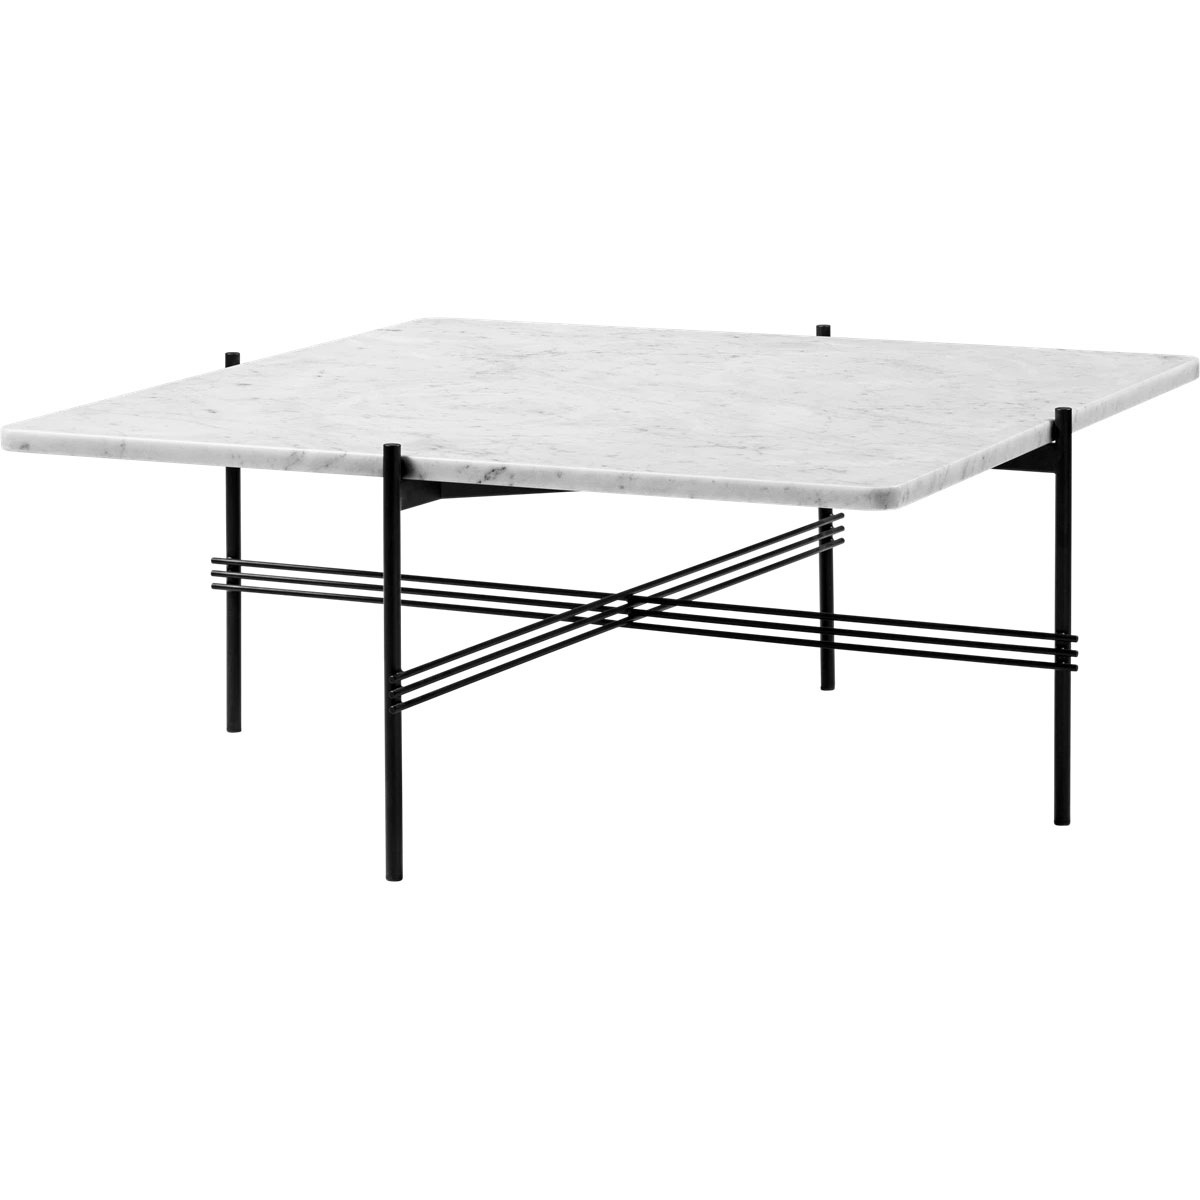 TS Coffee Table 105x105 cm, Black / White Marble